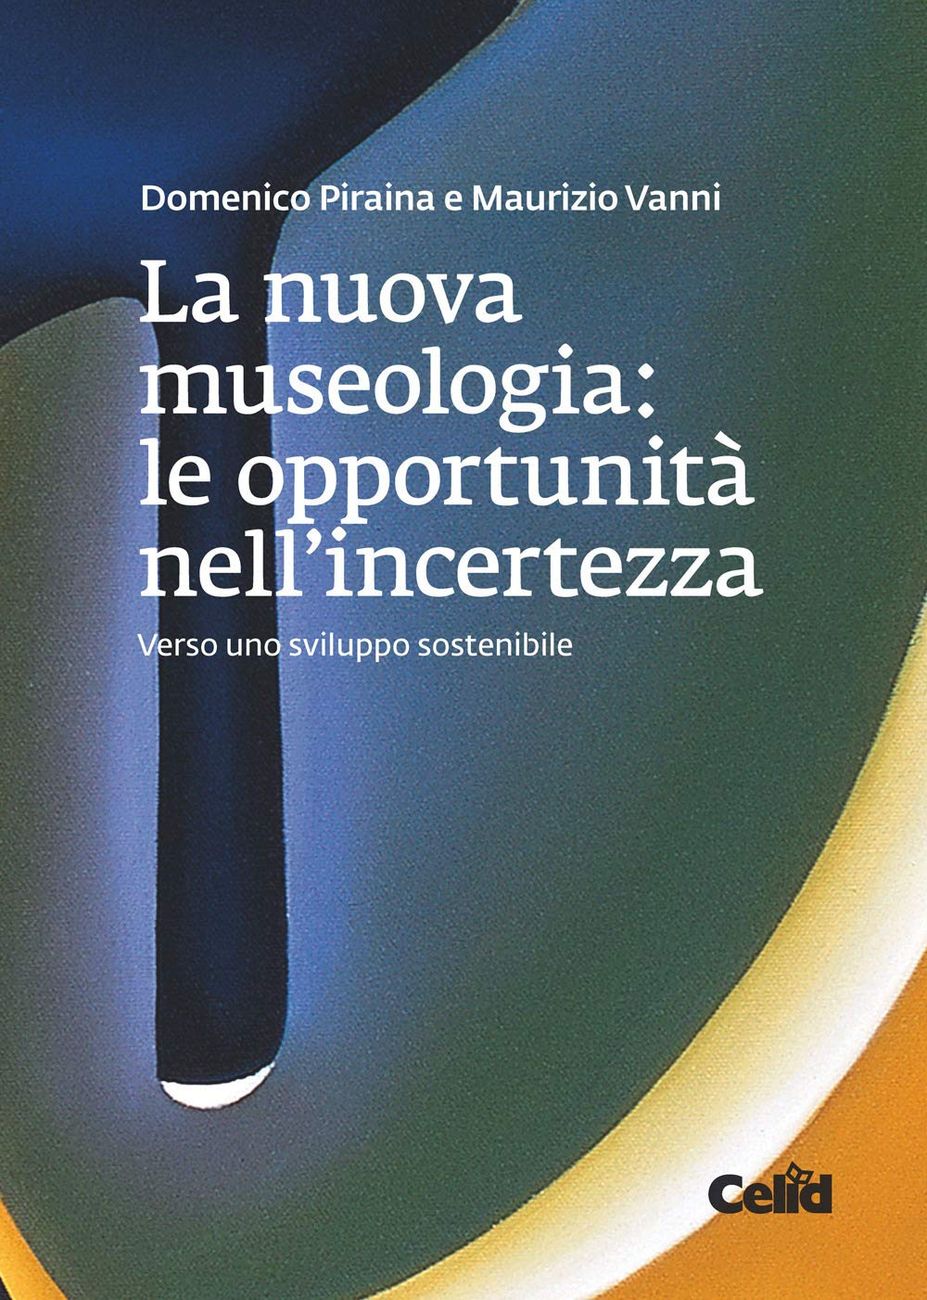 Domenico Piraina & Maurizio Vanni – La nuova museologia (CELID, Torino 2020)